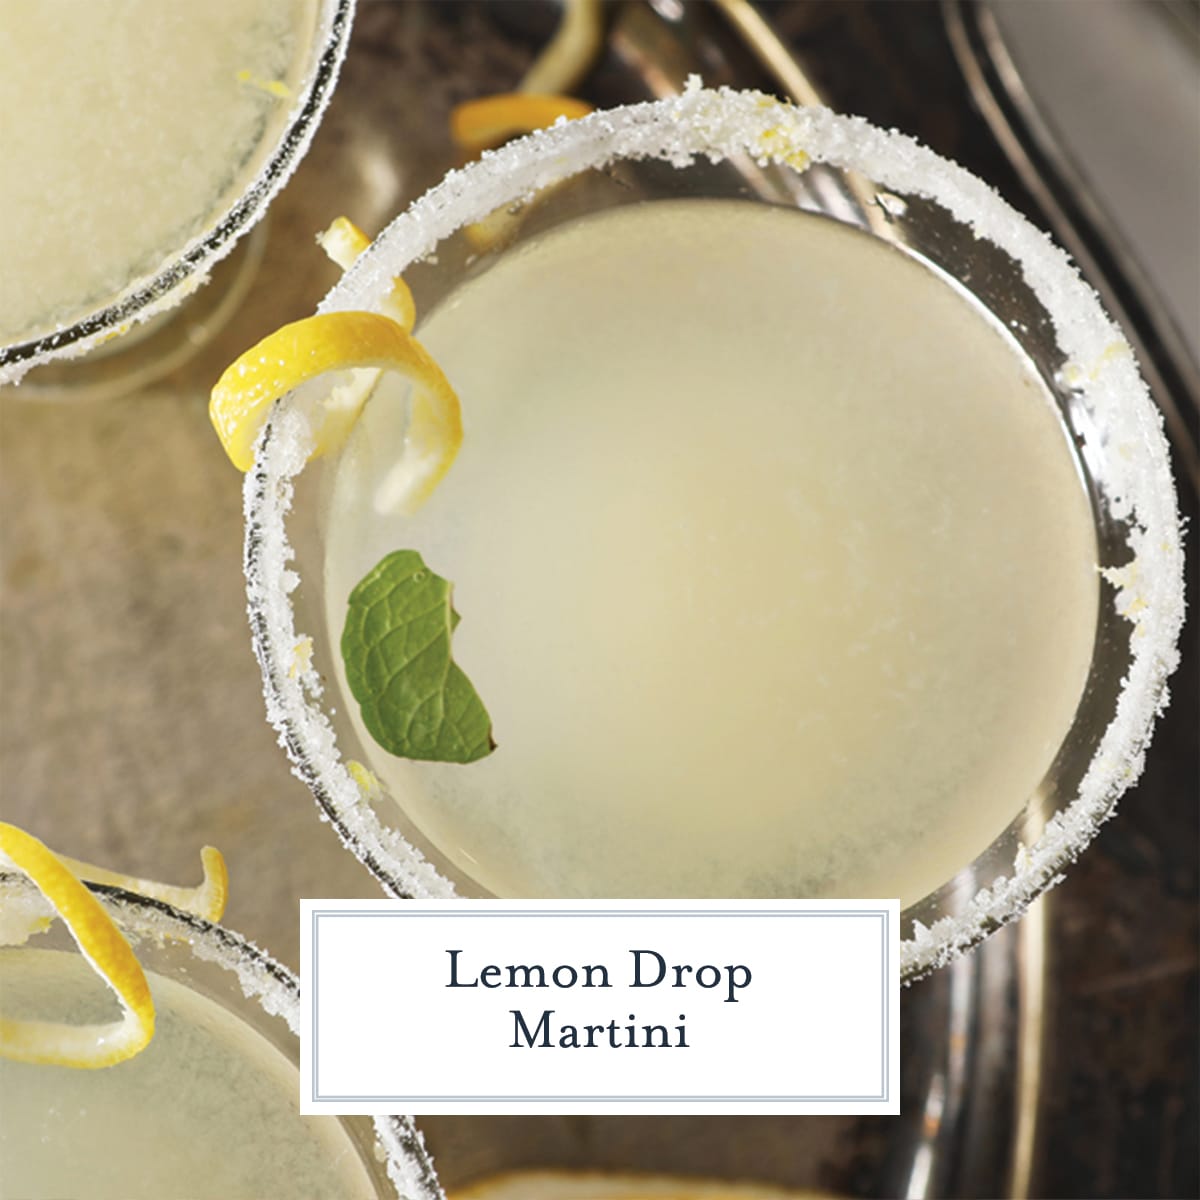 Lemon Drop Shots - Southern Kissed